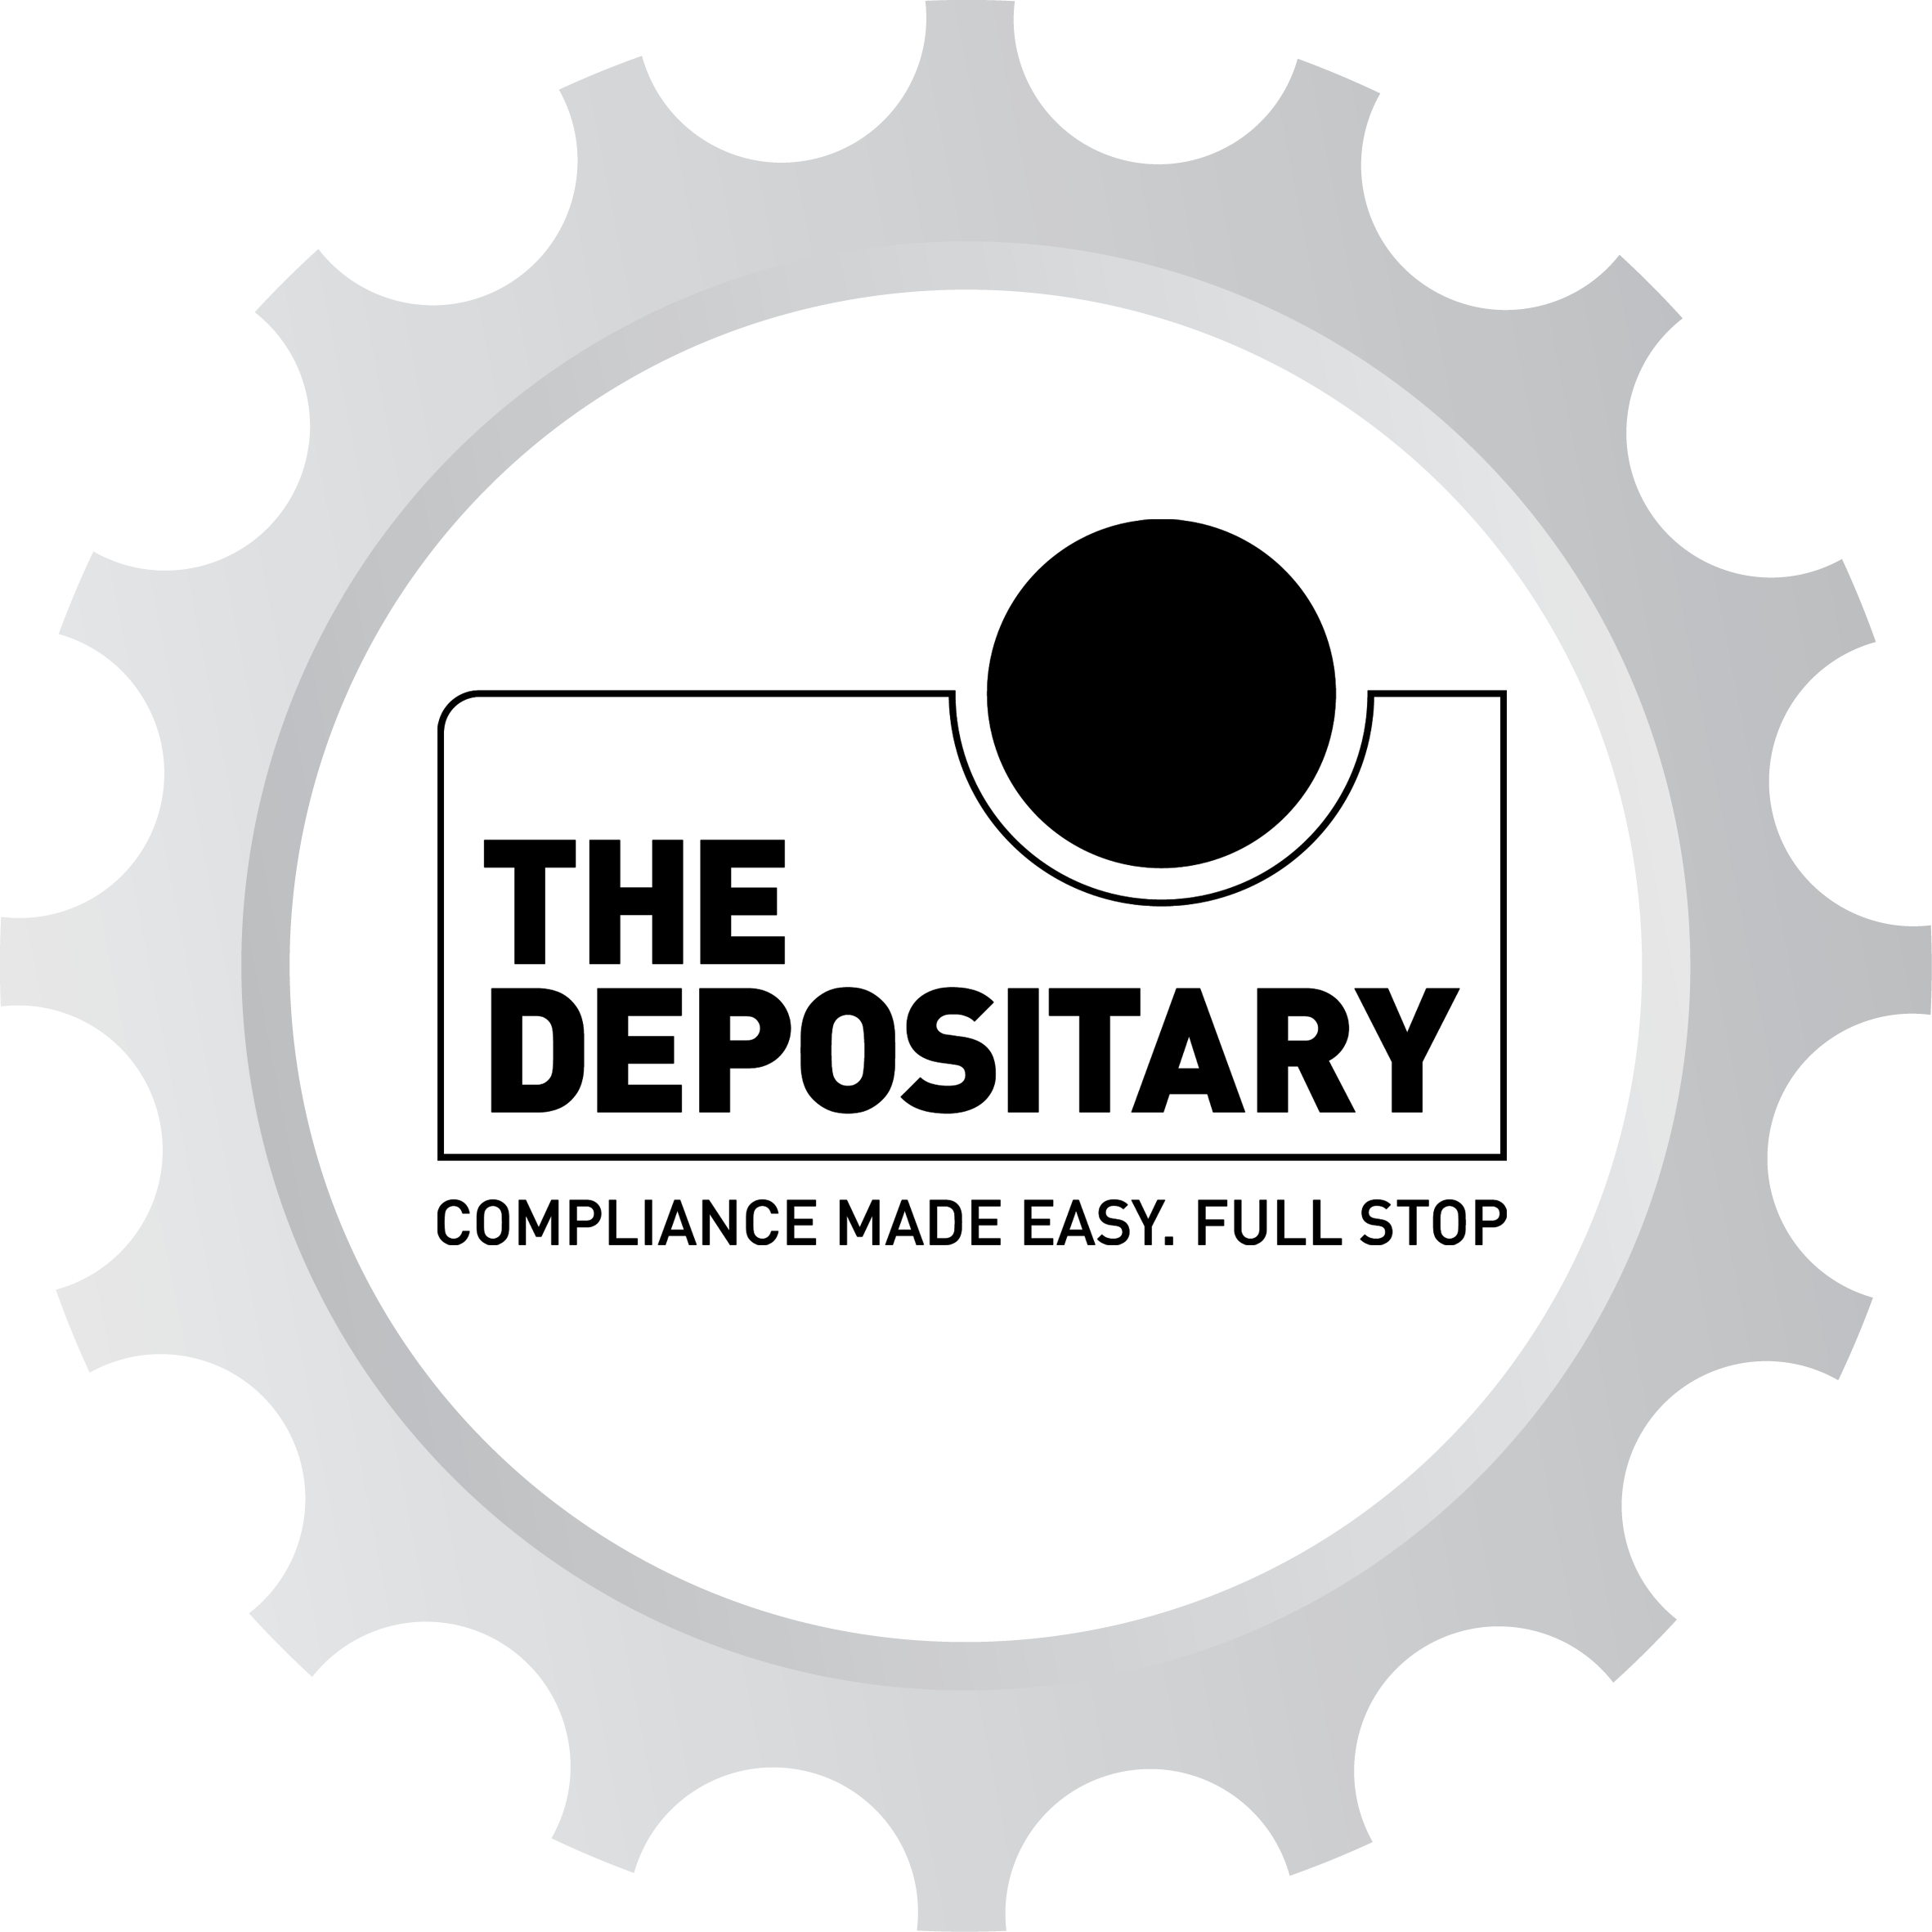 The Depositary logo